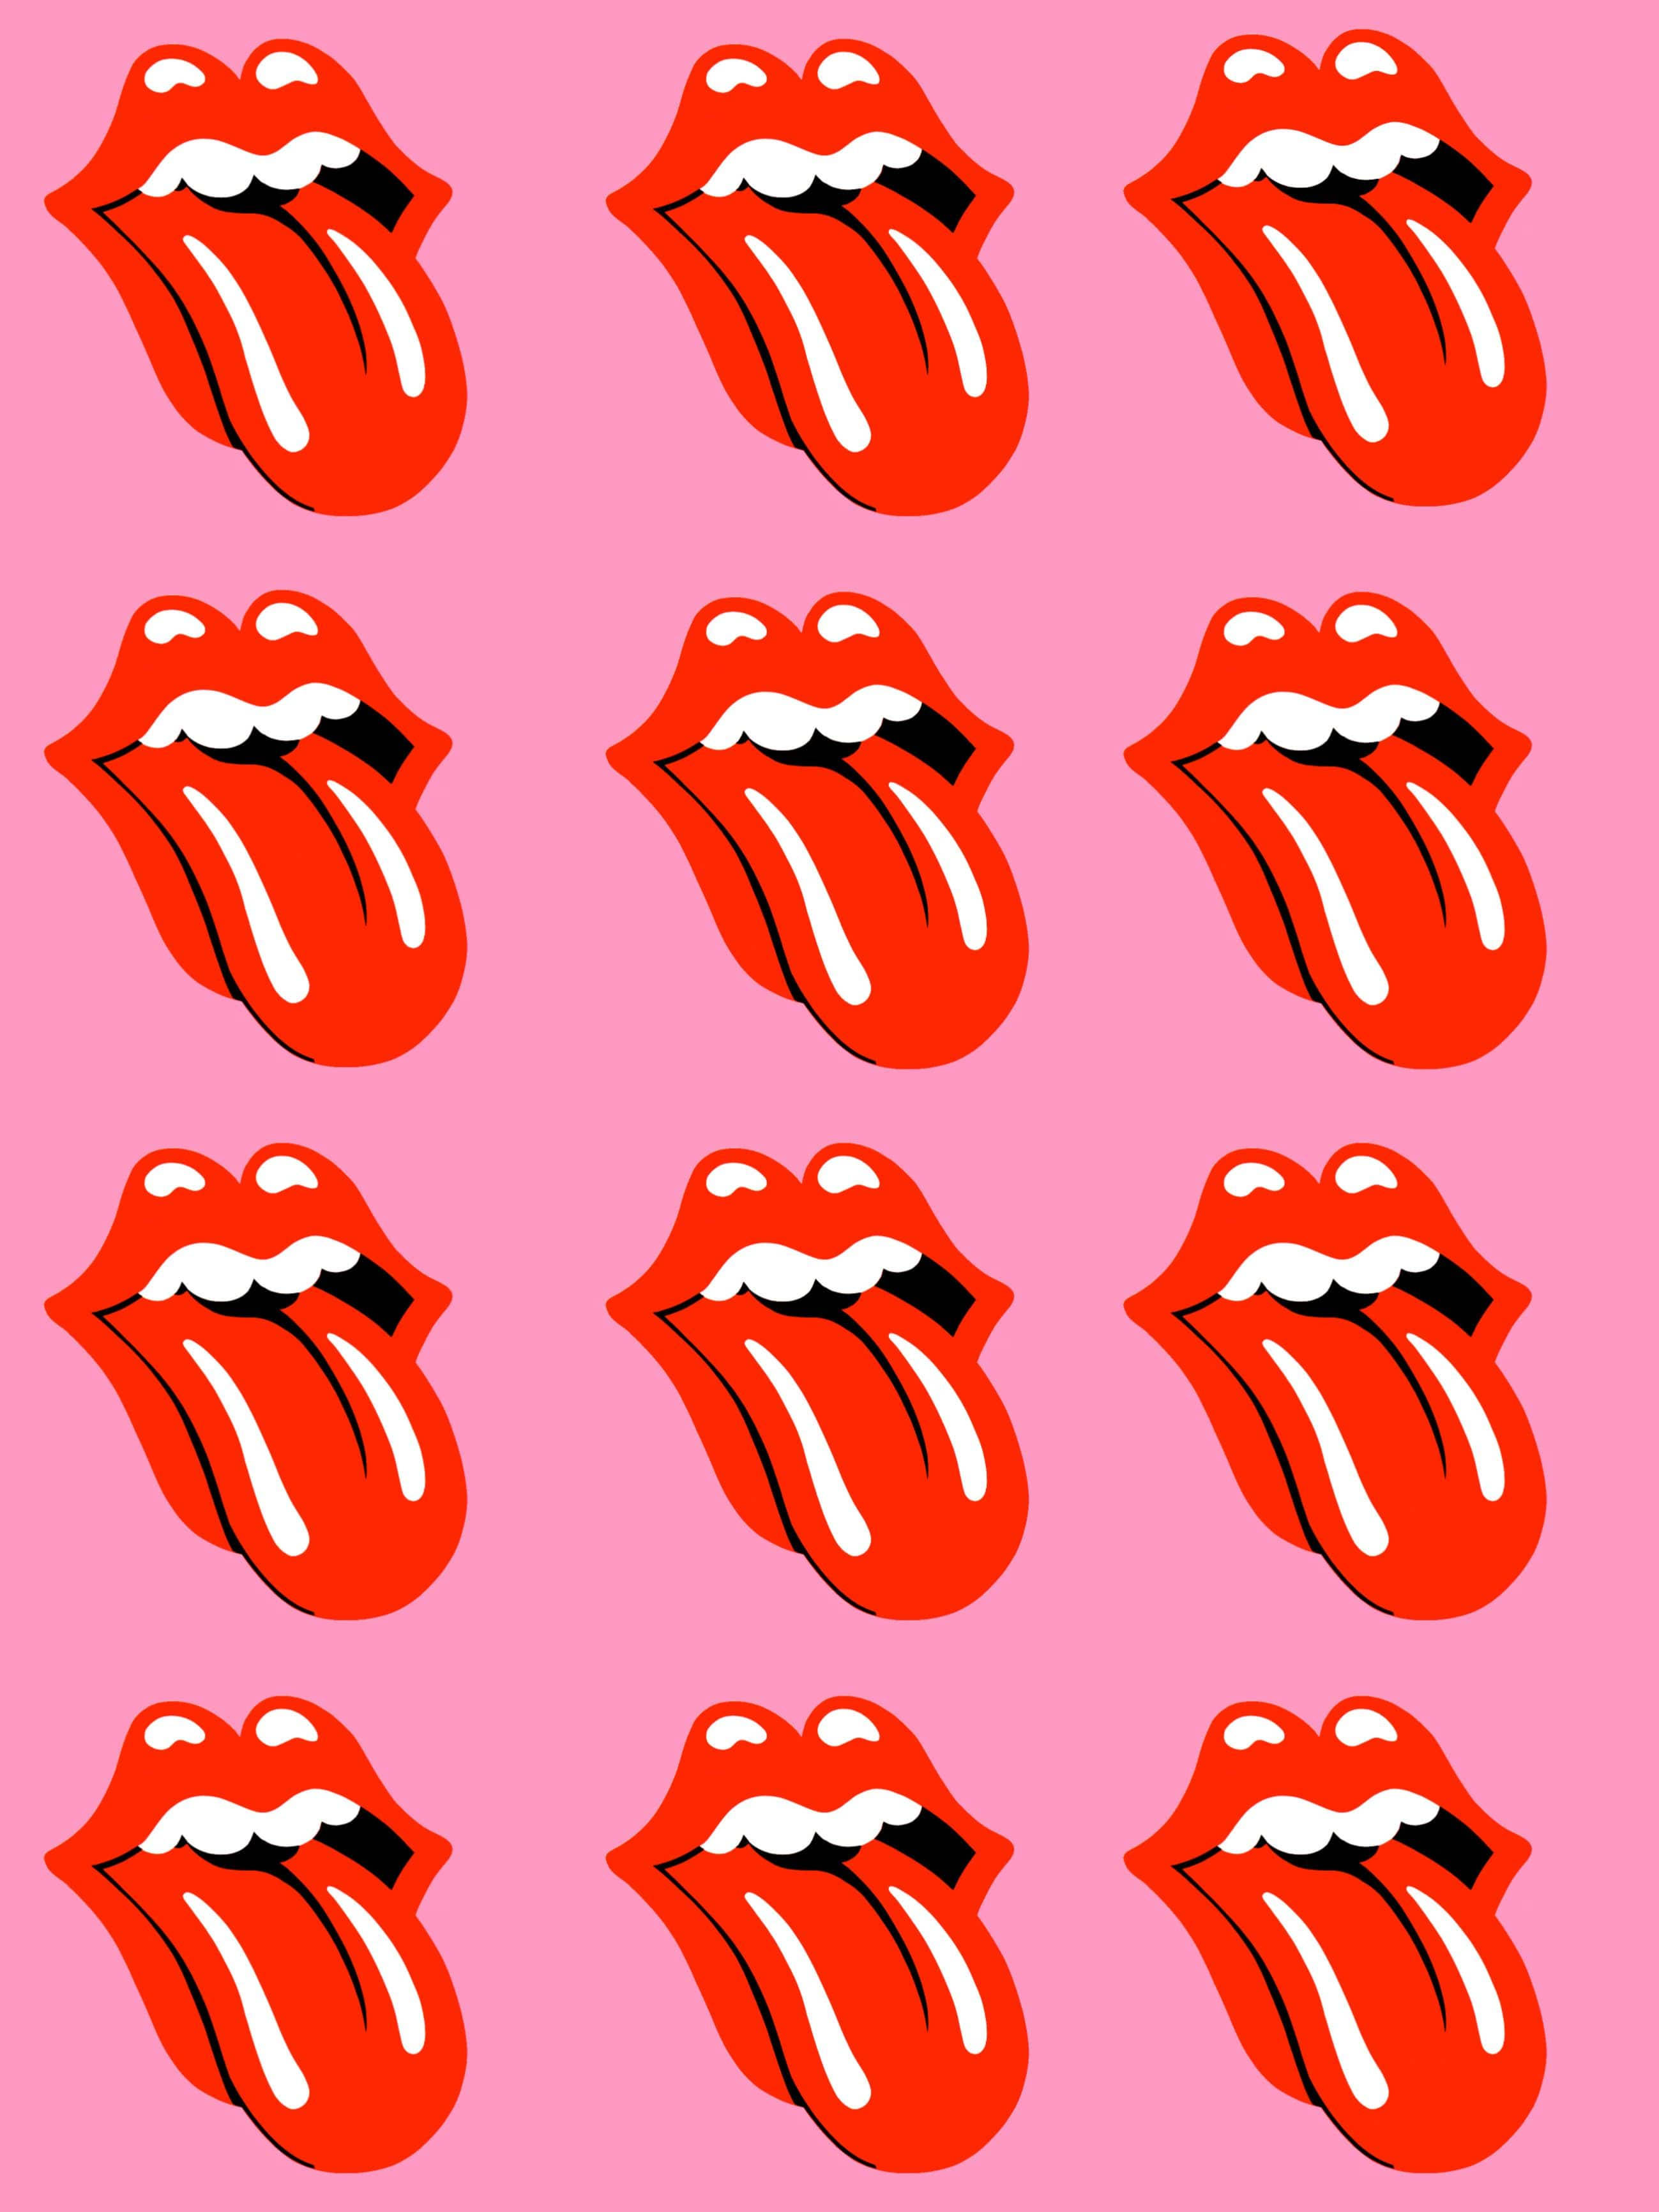 Rolling Stones Wallpapers